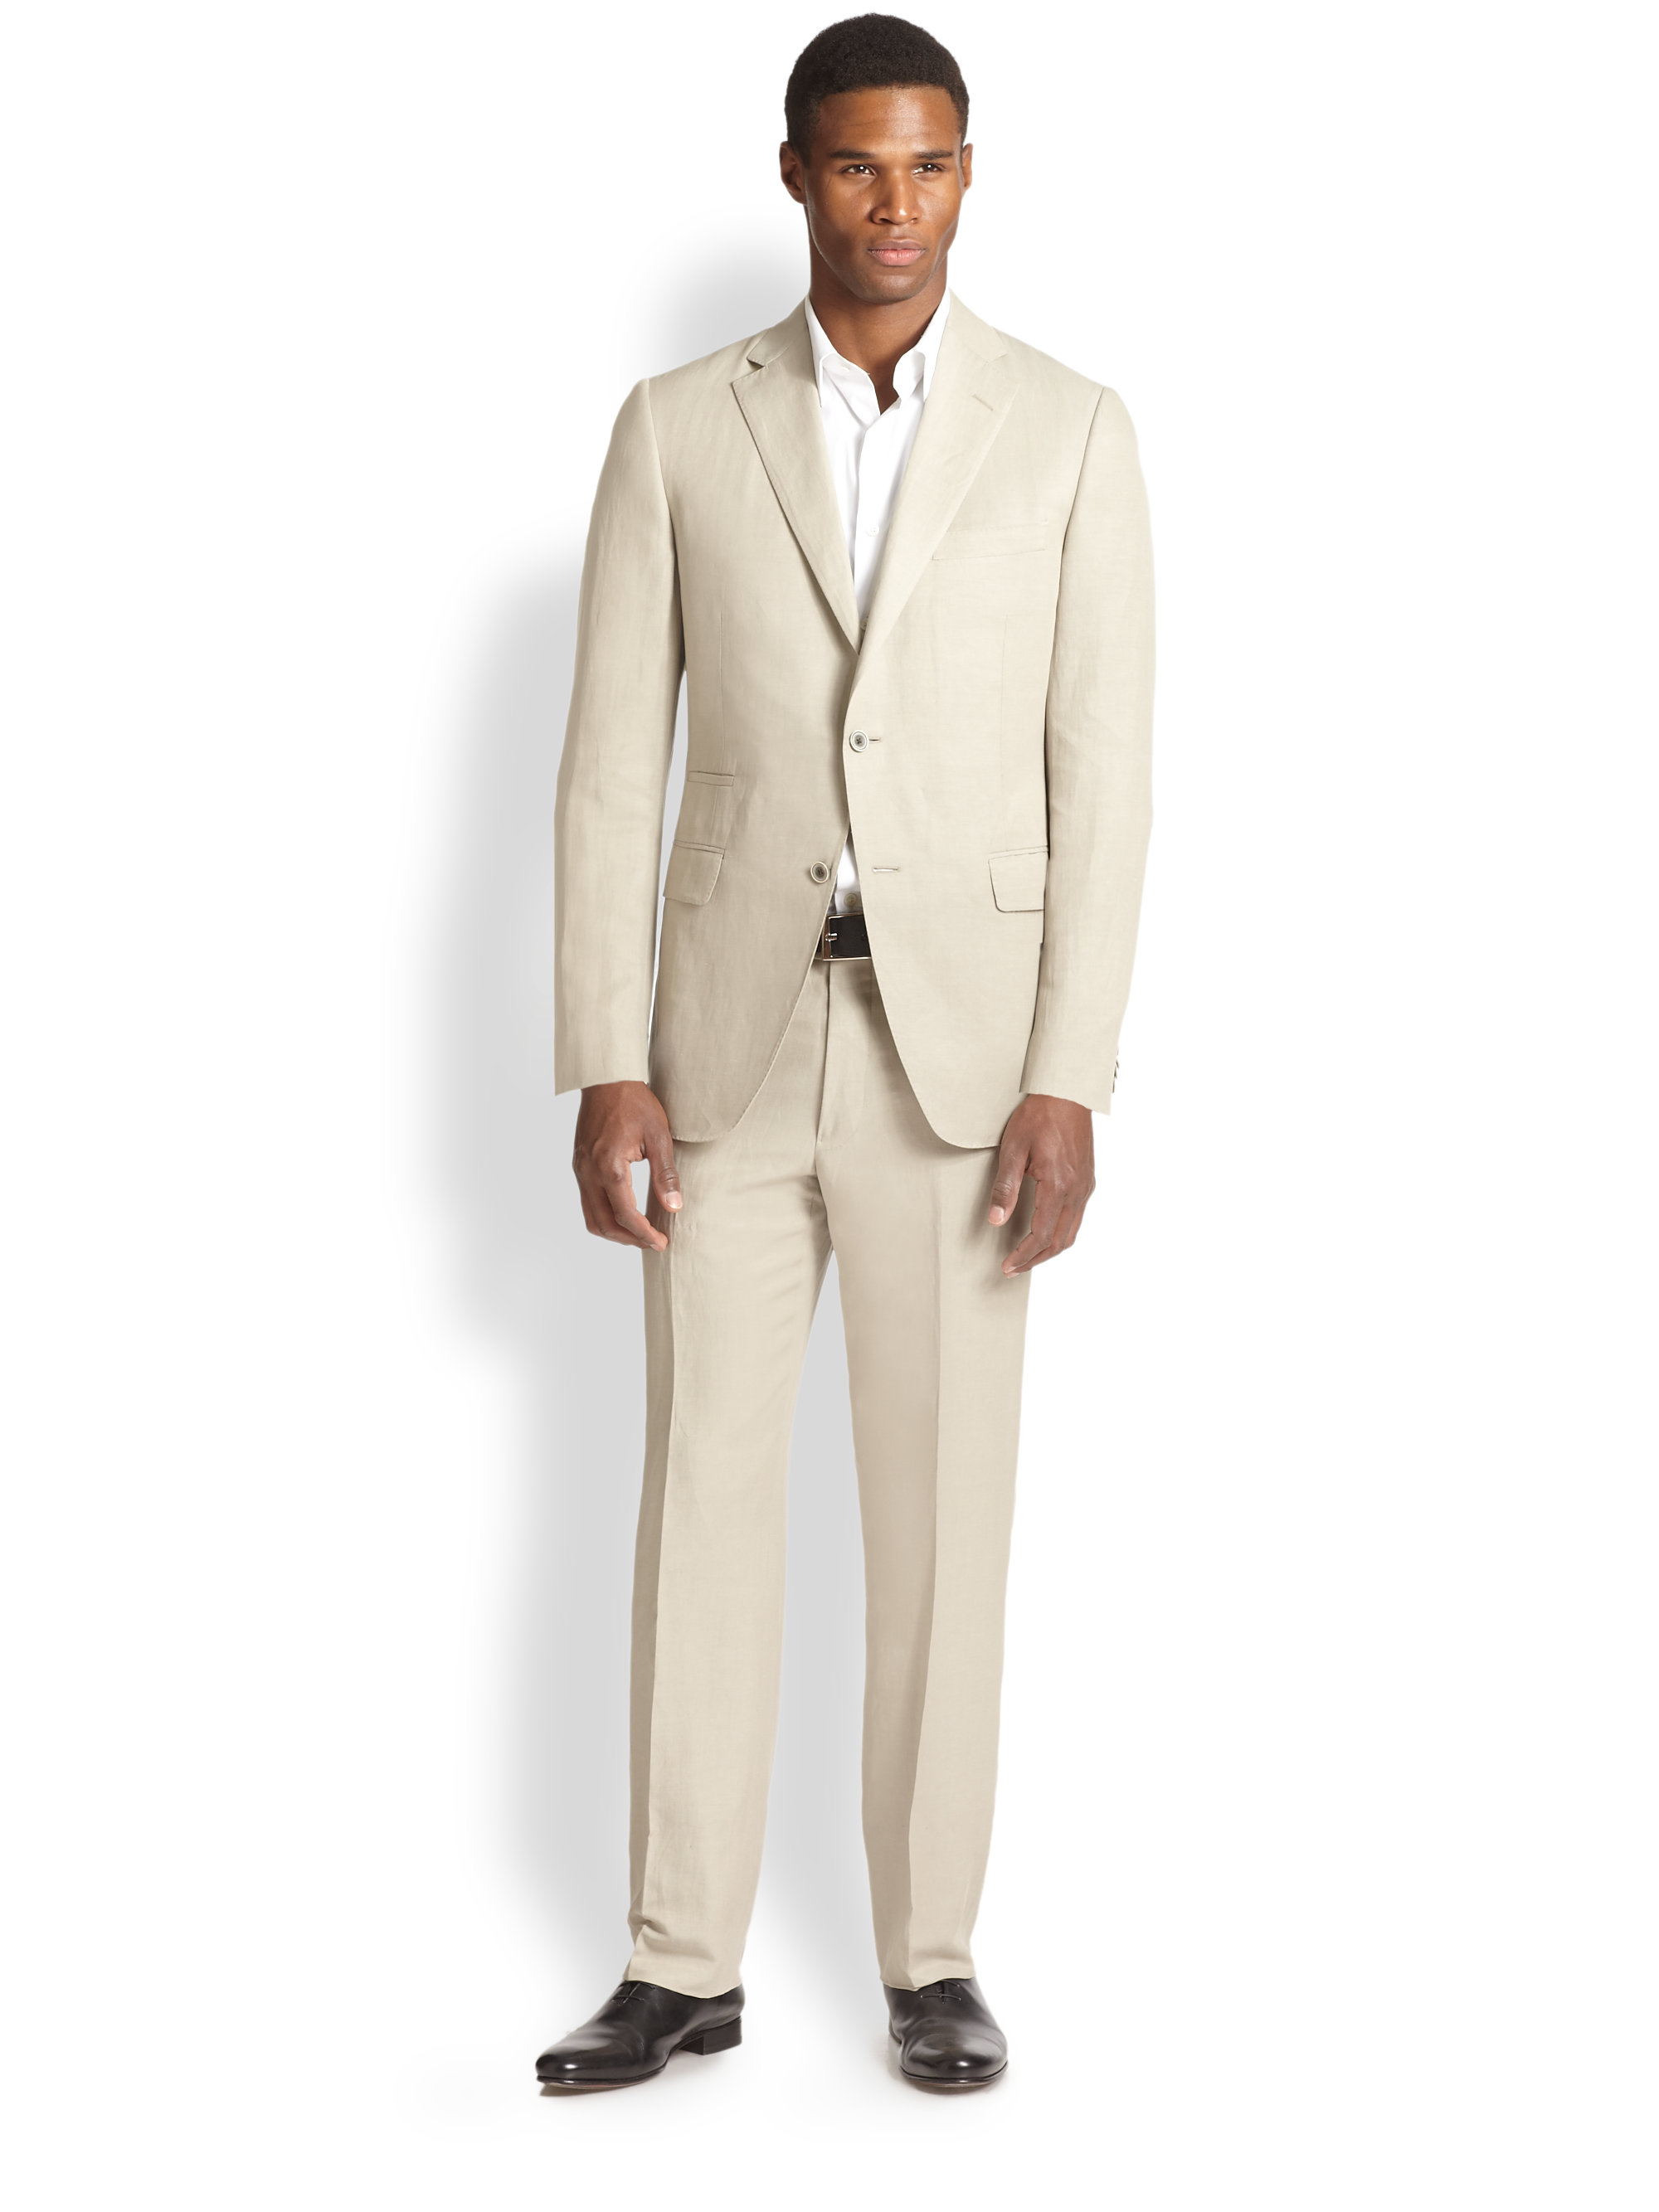 Lyst - Saks Fifth Avenue Samuelsohn Slub Silk & Linen Suit in Natural ...